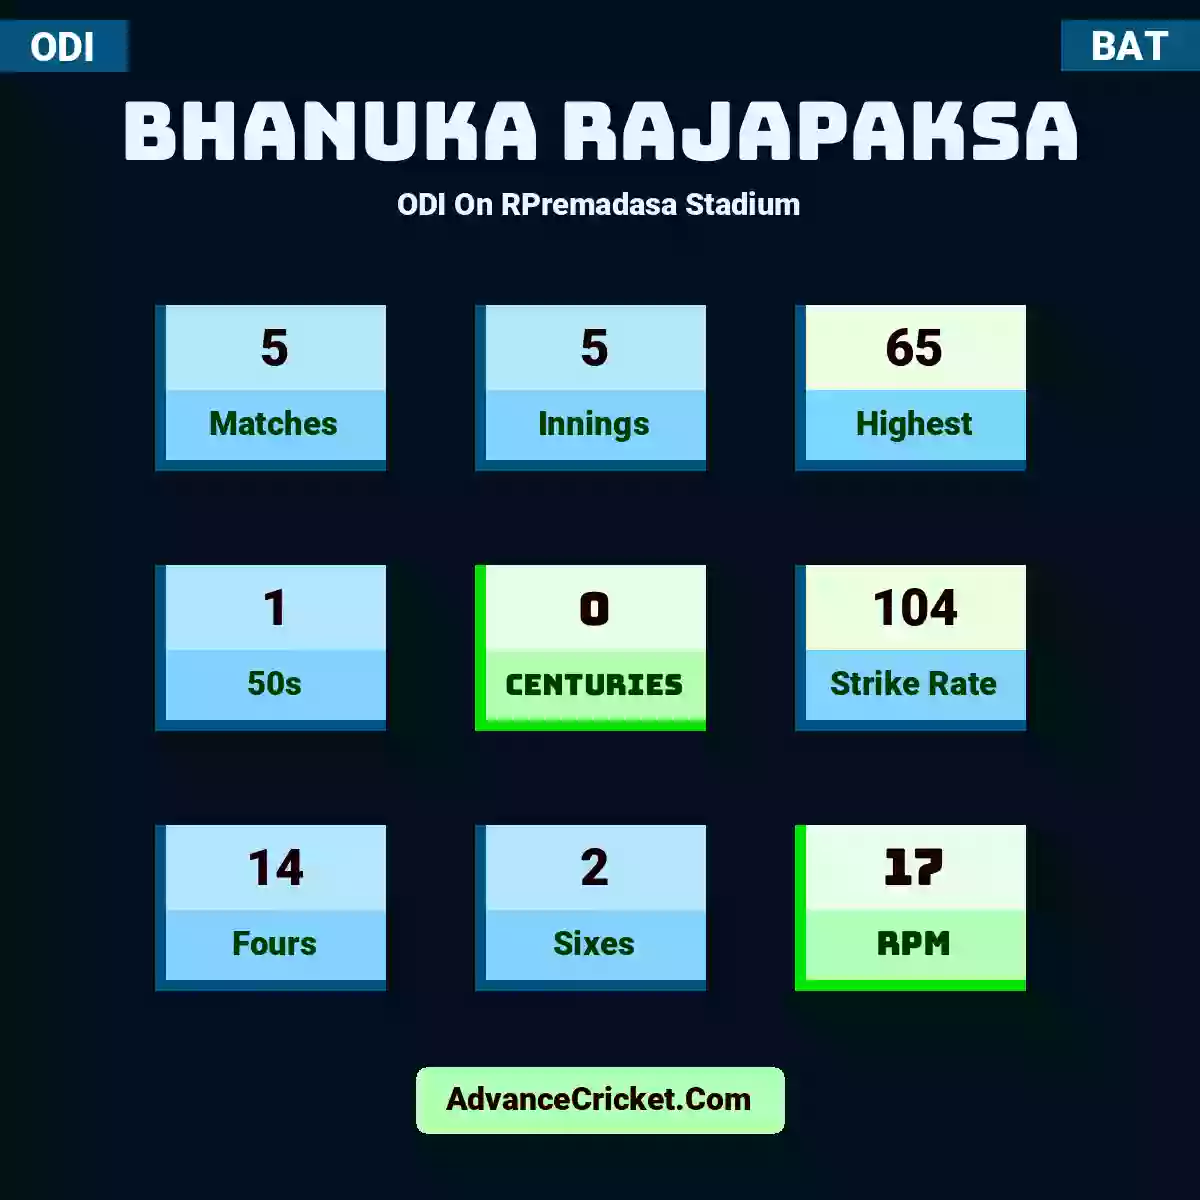 Bhanuka Rajapaksa ODI  On RPremadasa Stadium, Bhanuka Rajapaksa played 5 matches, scored 65 runs as highest, 1 half-centuries, and 0 centuries, with a strike rate of 104. B.Rajapaksa hit 14 fours and 2 sixes, with an RPM of 17.